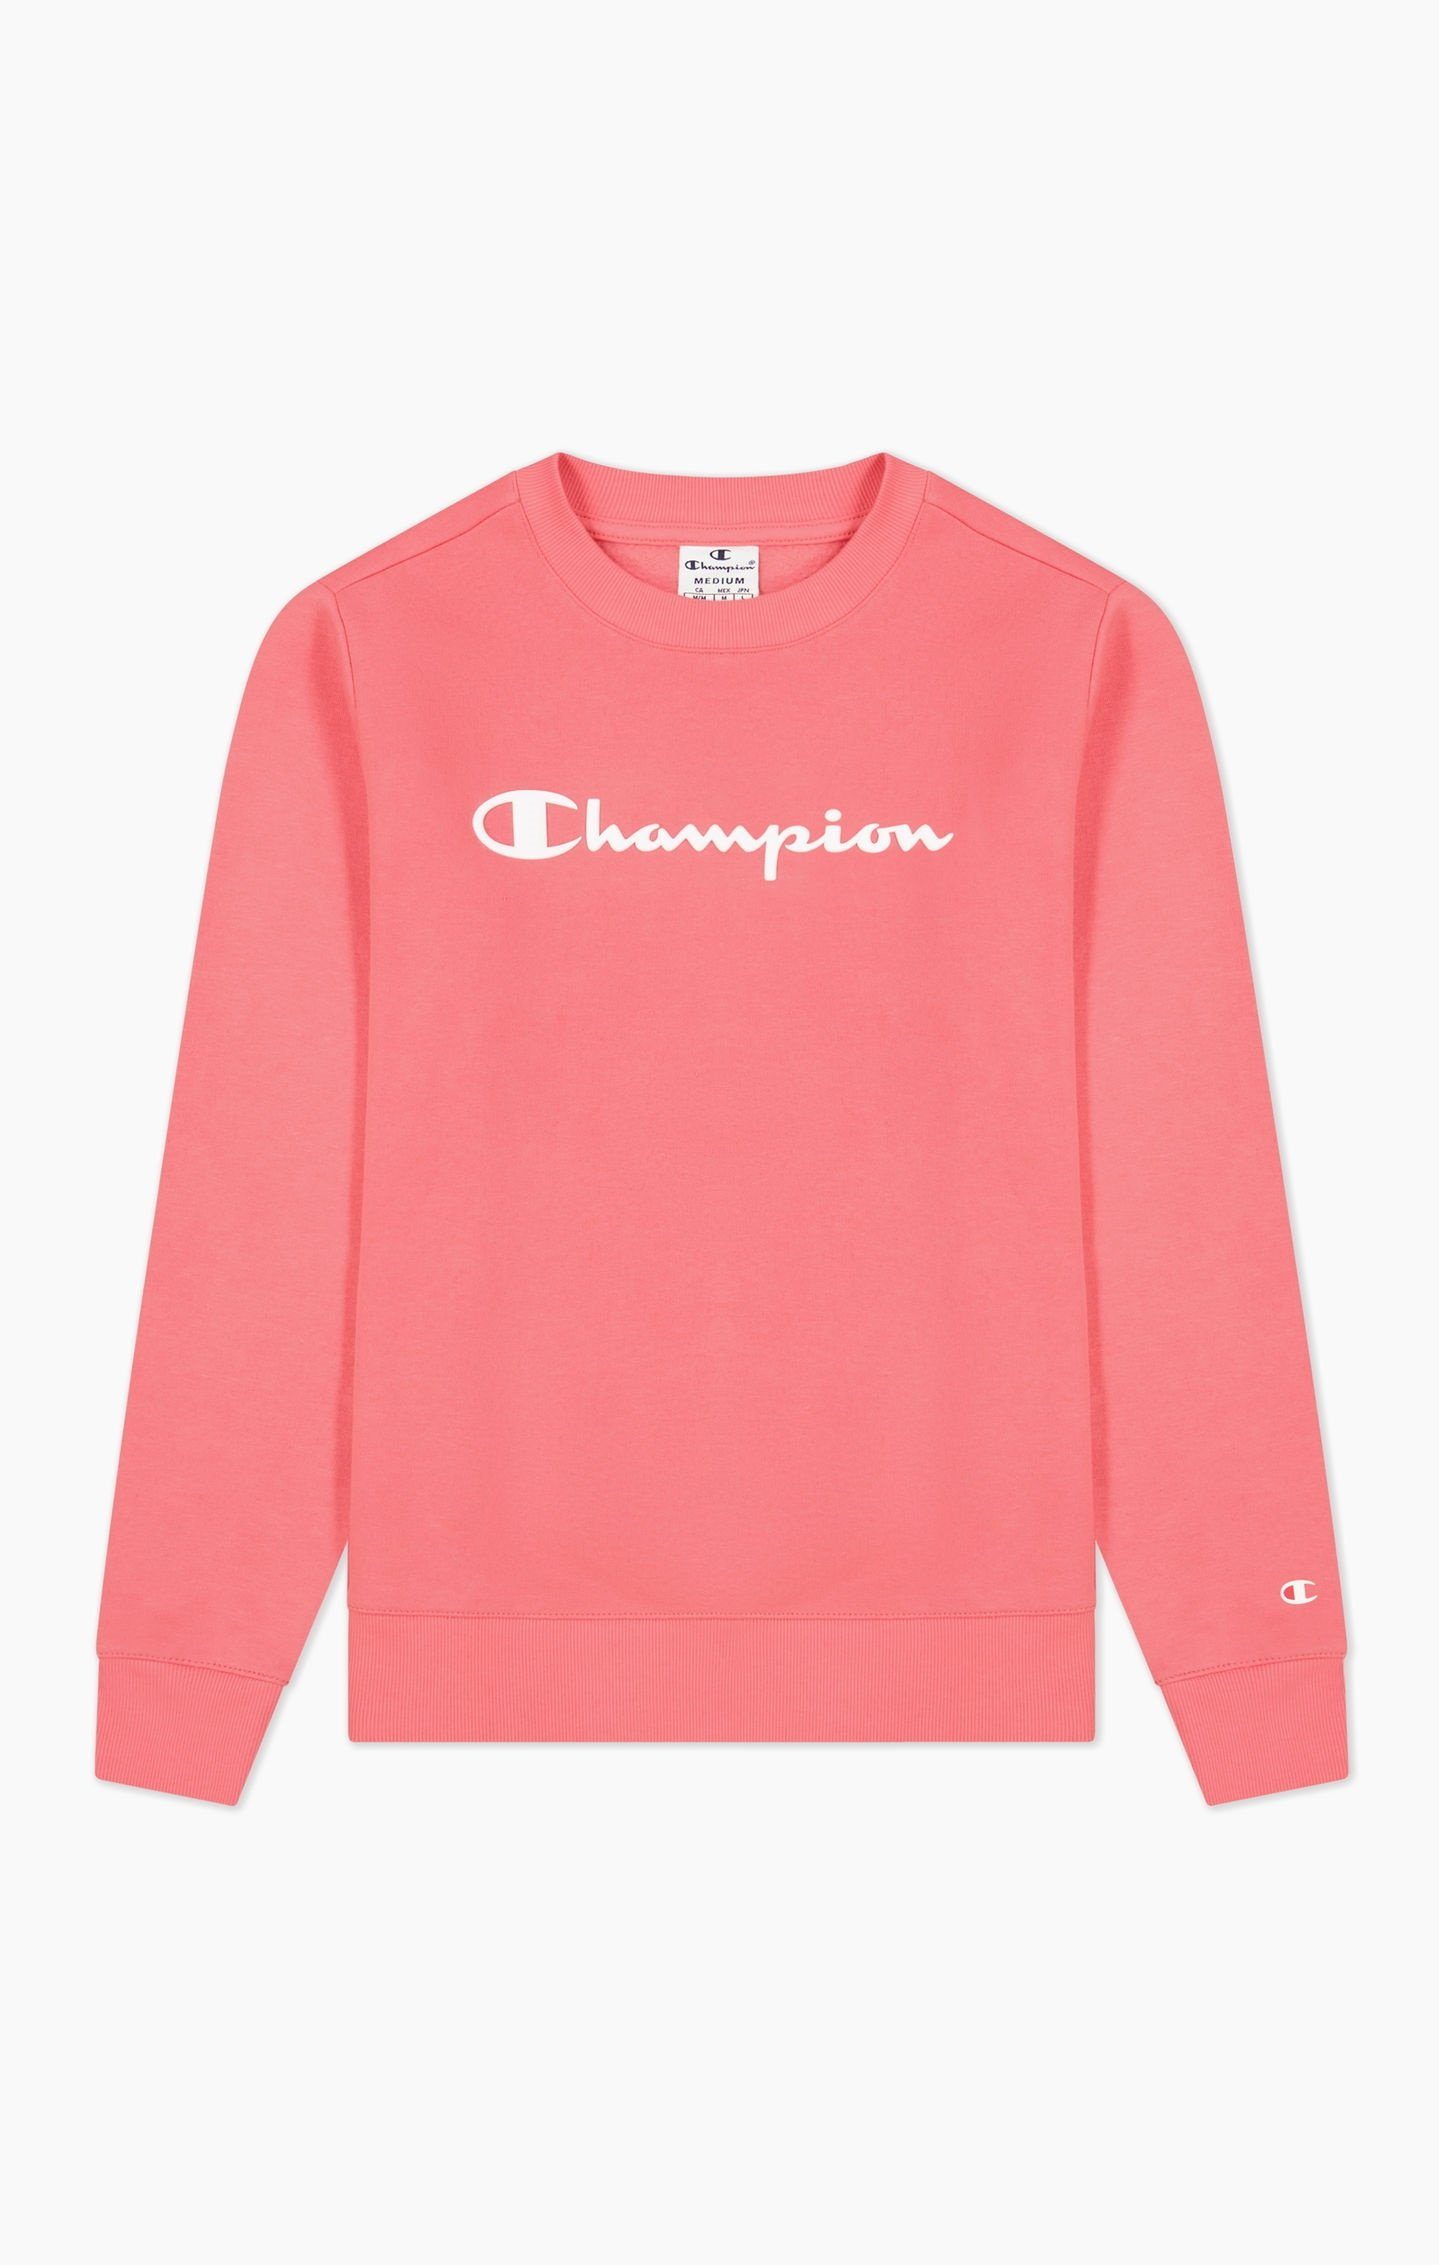 Champion Sweatshirt Pullover rosa aus Baumwollfleece mit Sweatshirt